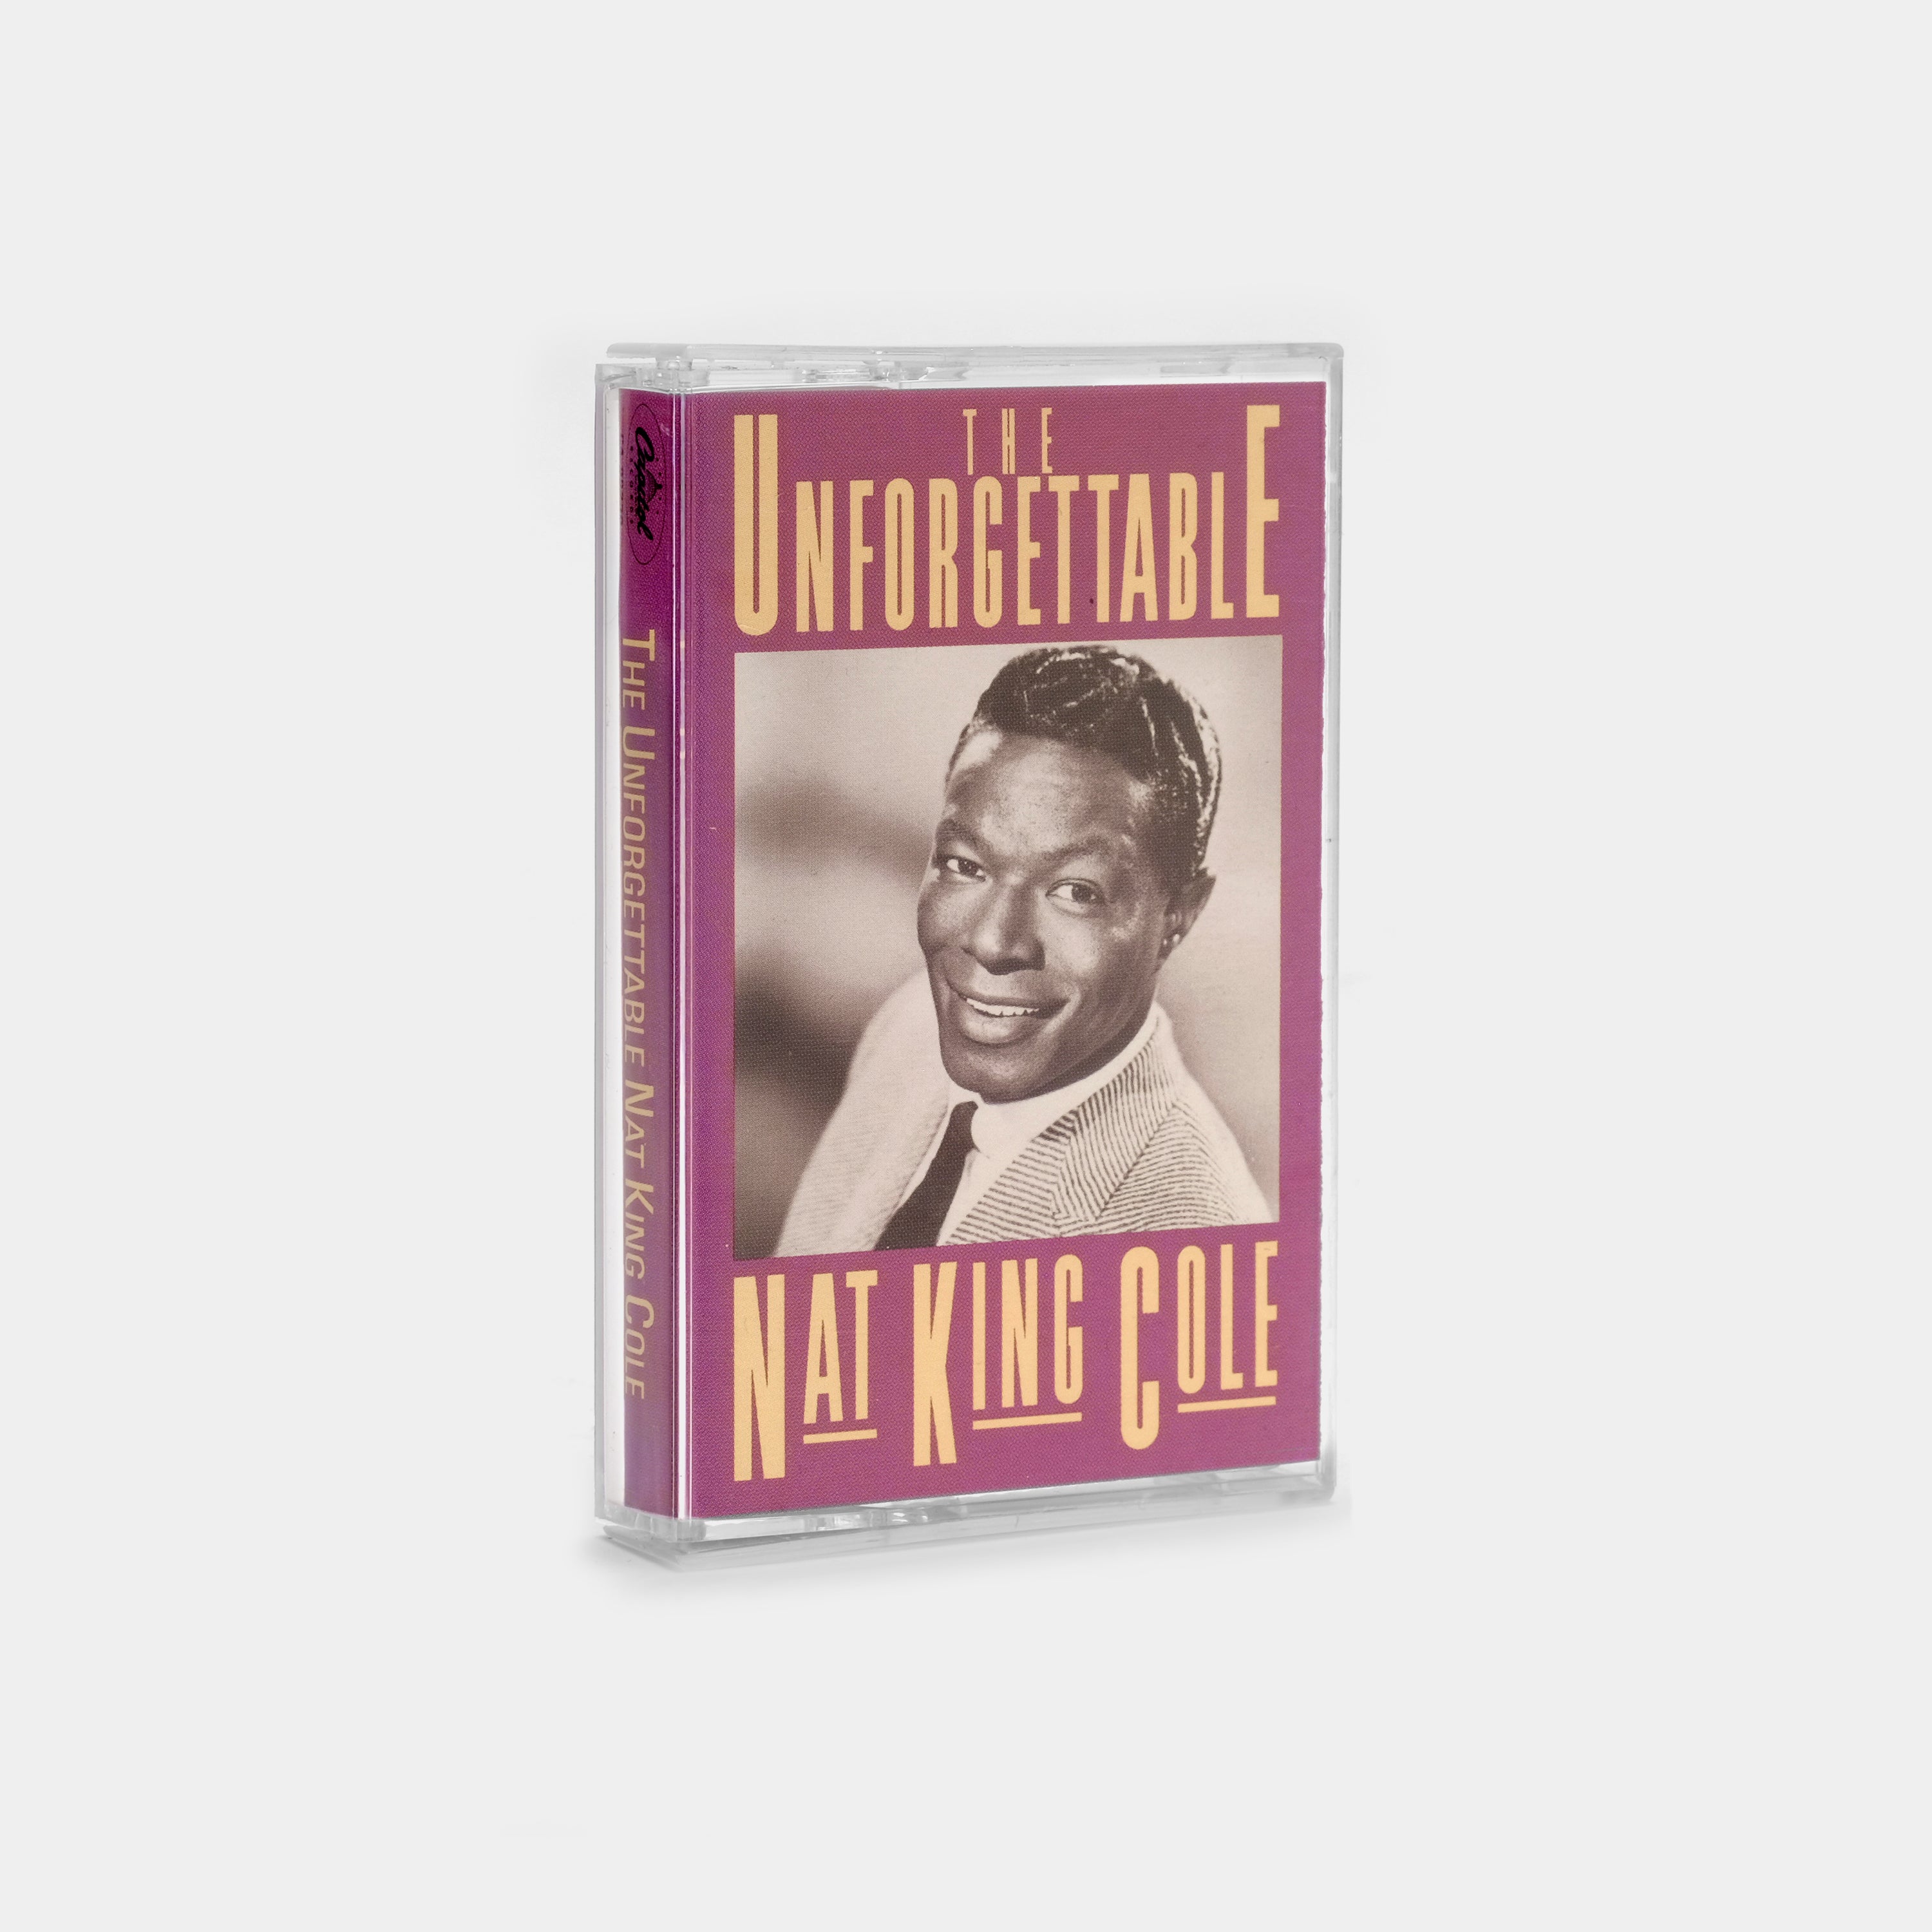 Nat King Cole - The Unforgettable Nat King Cole Cassette Tape